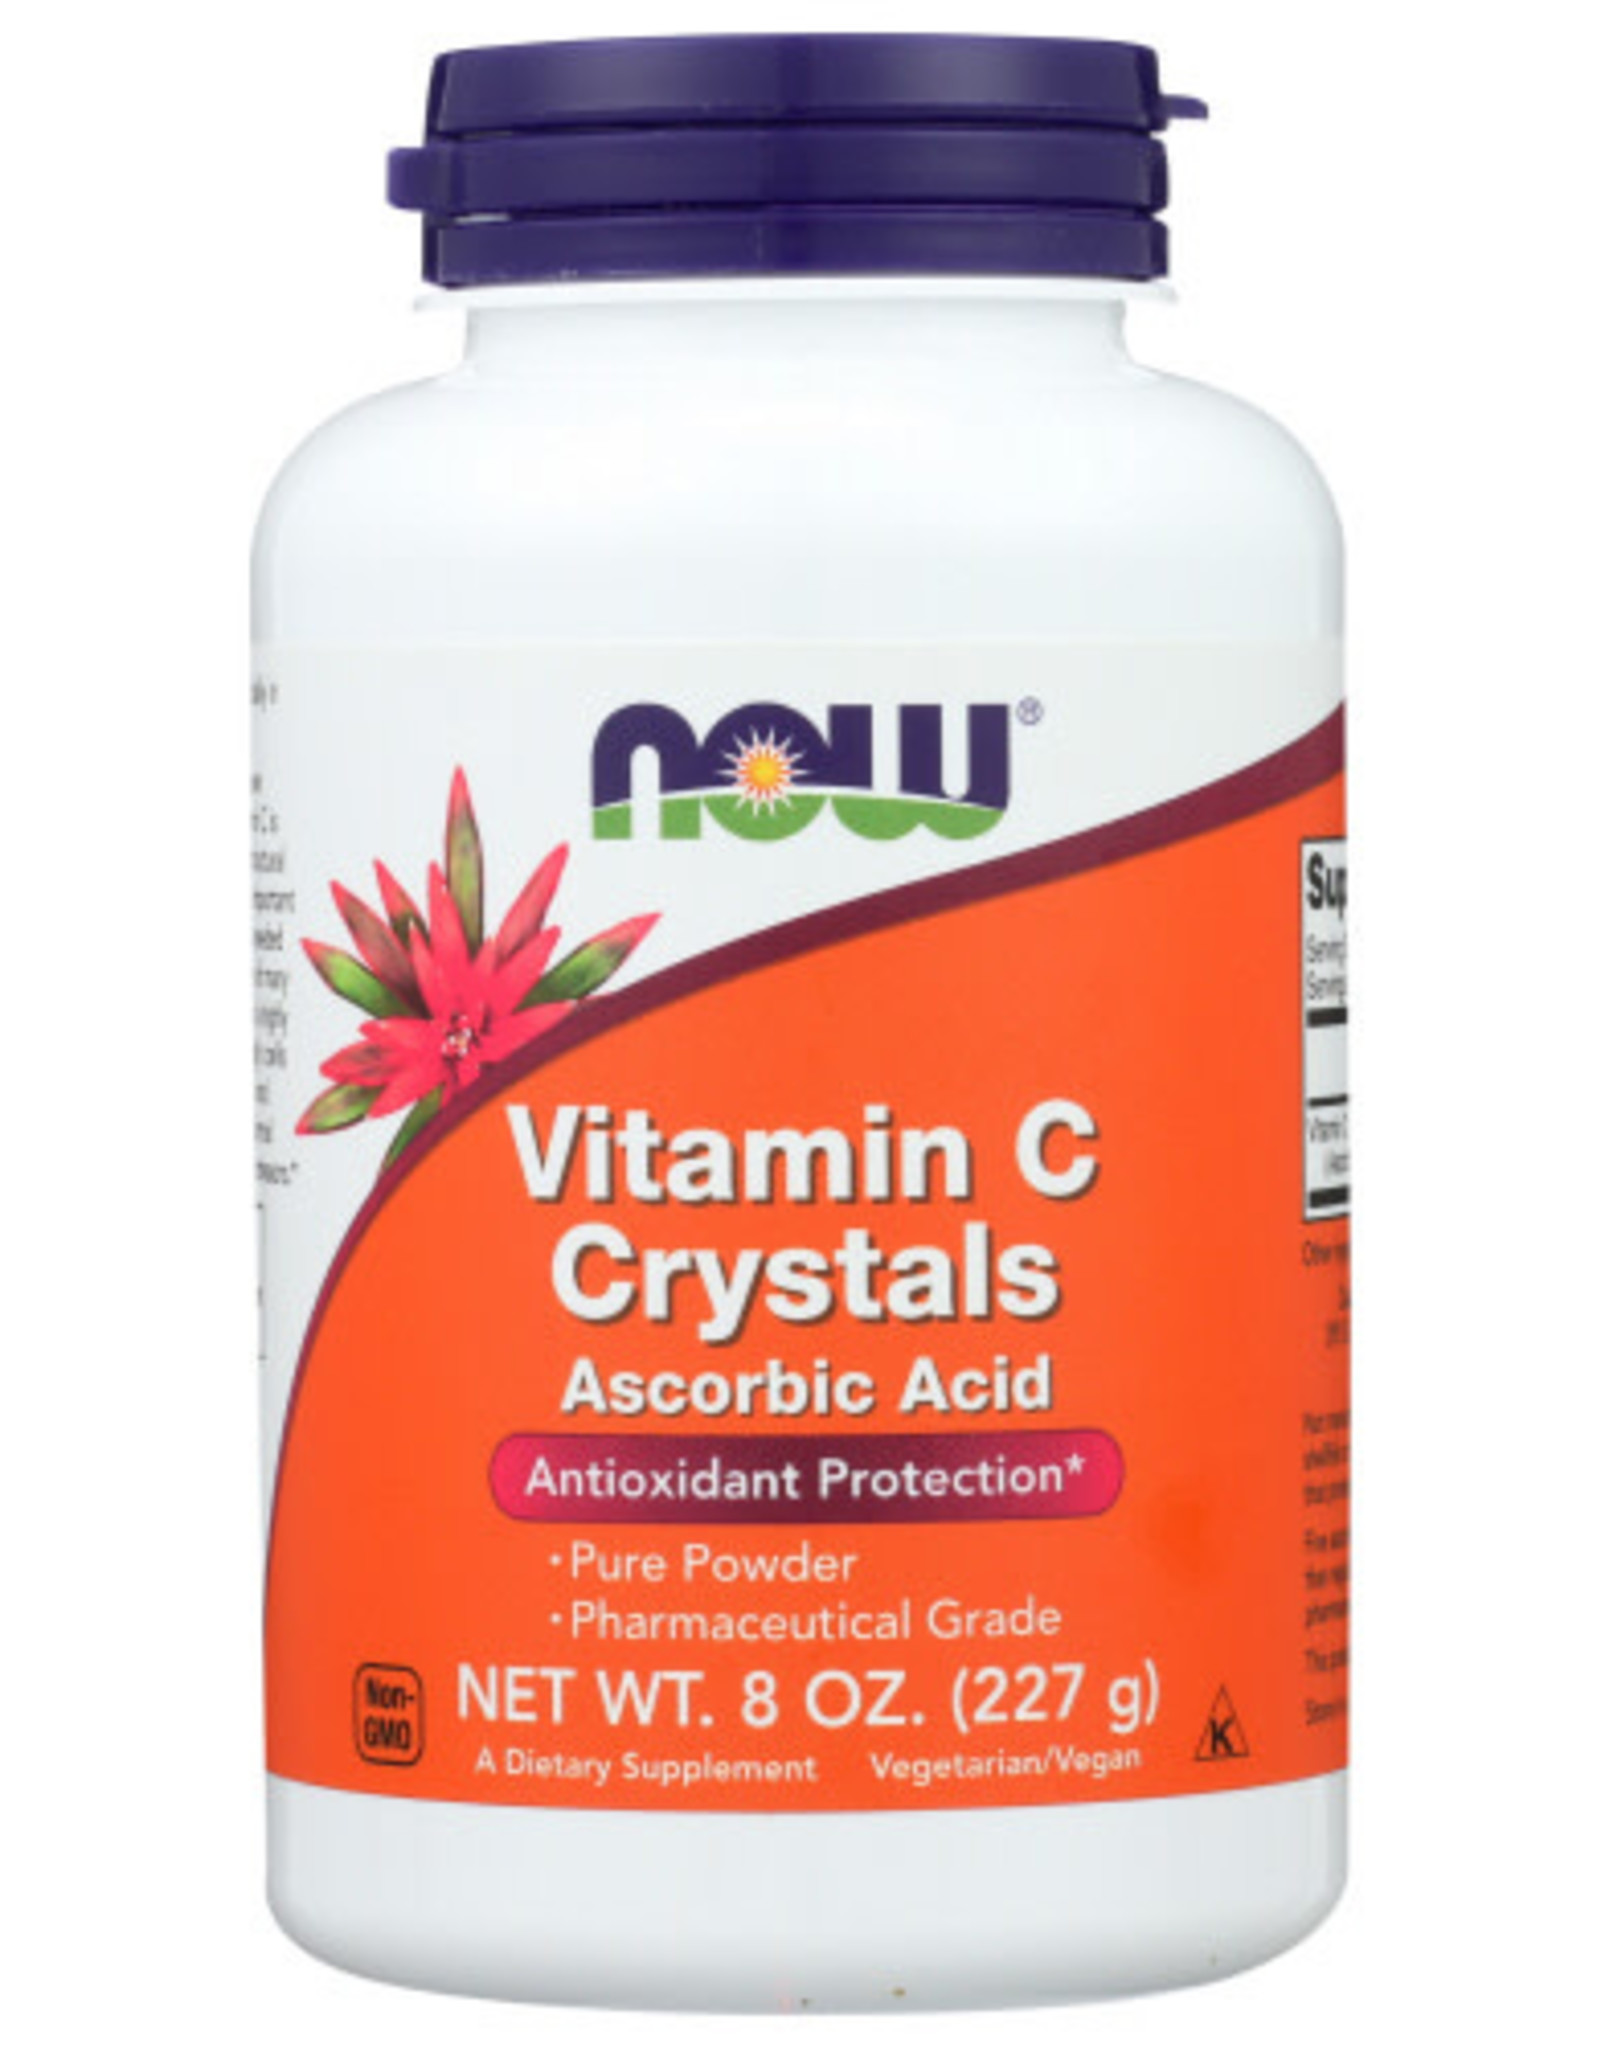 NOW® X Vitamin C Crystals 8oz